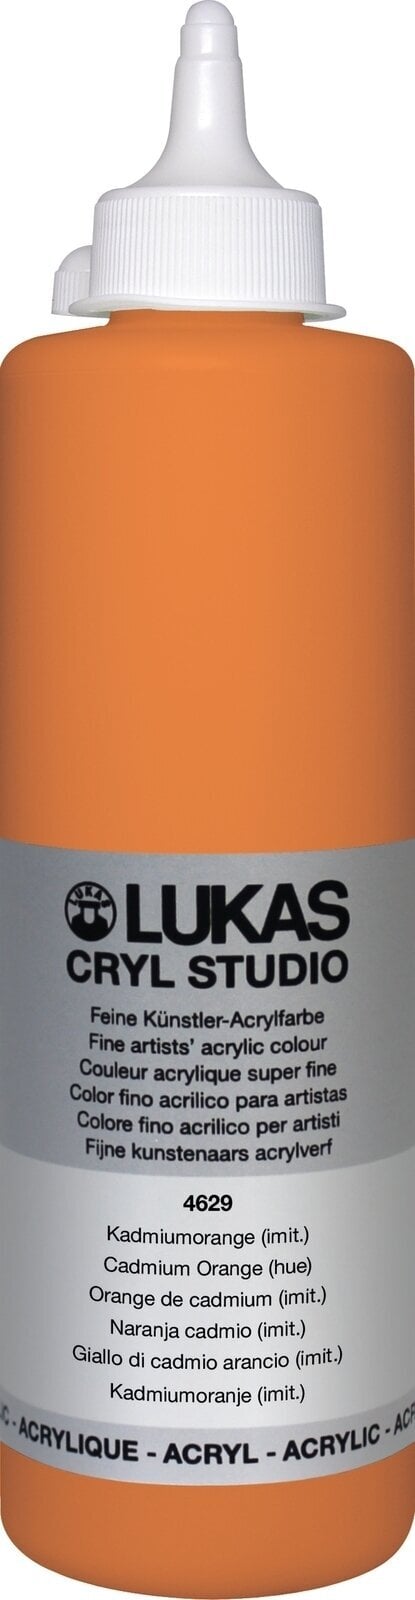 Akrylová barva Lukas Cryl Studio Plastic Bottle Akrylová barva Cadmium Orange Hue 500 ml 1 ks